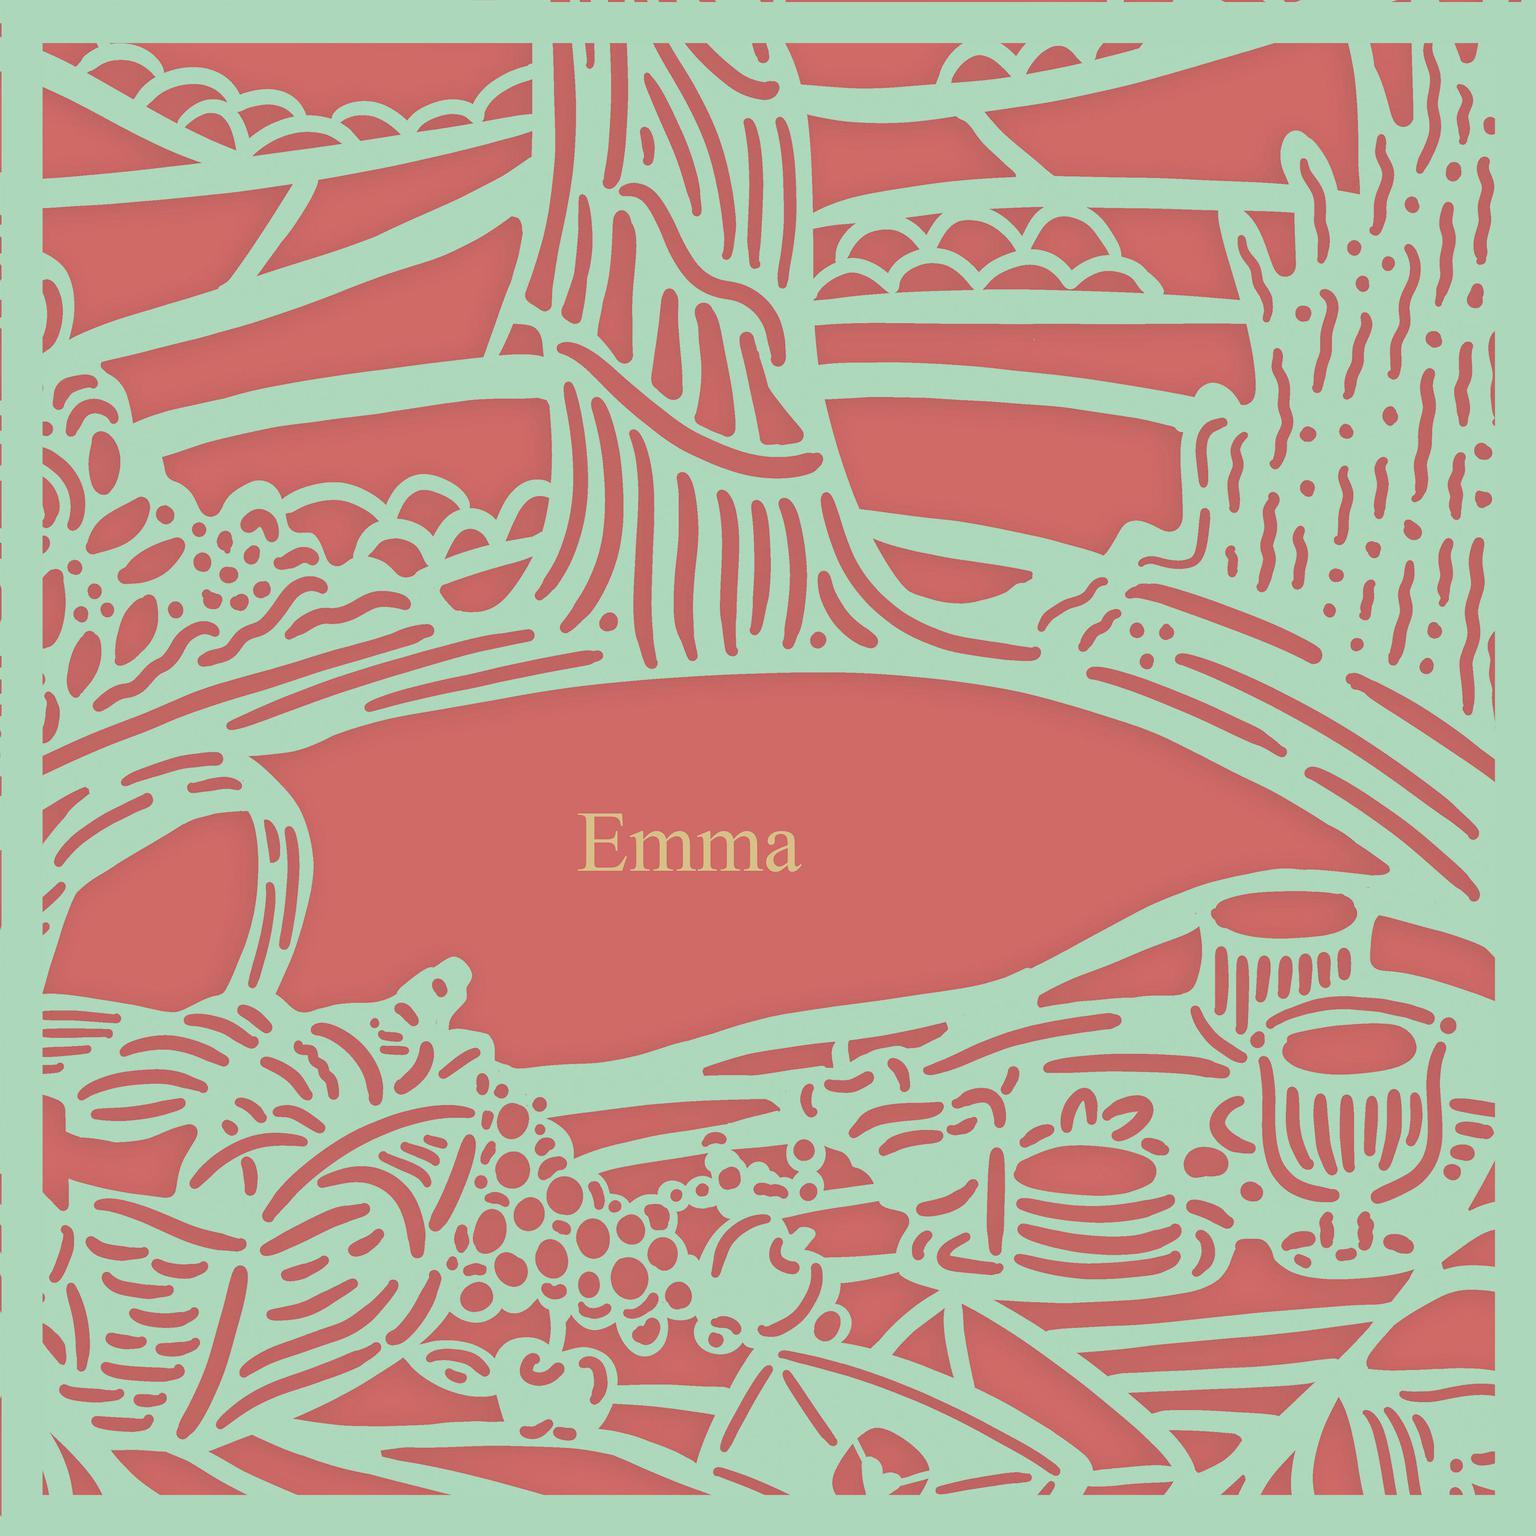 Emma (Seasons Edition -- Spring) Audiobook, by Jane Austen